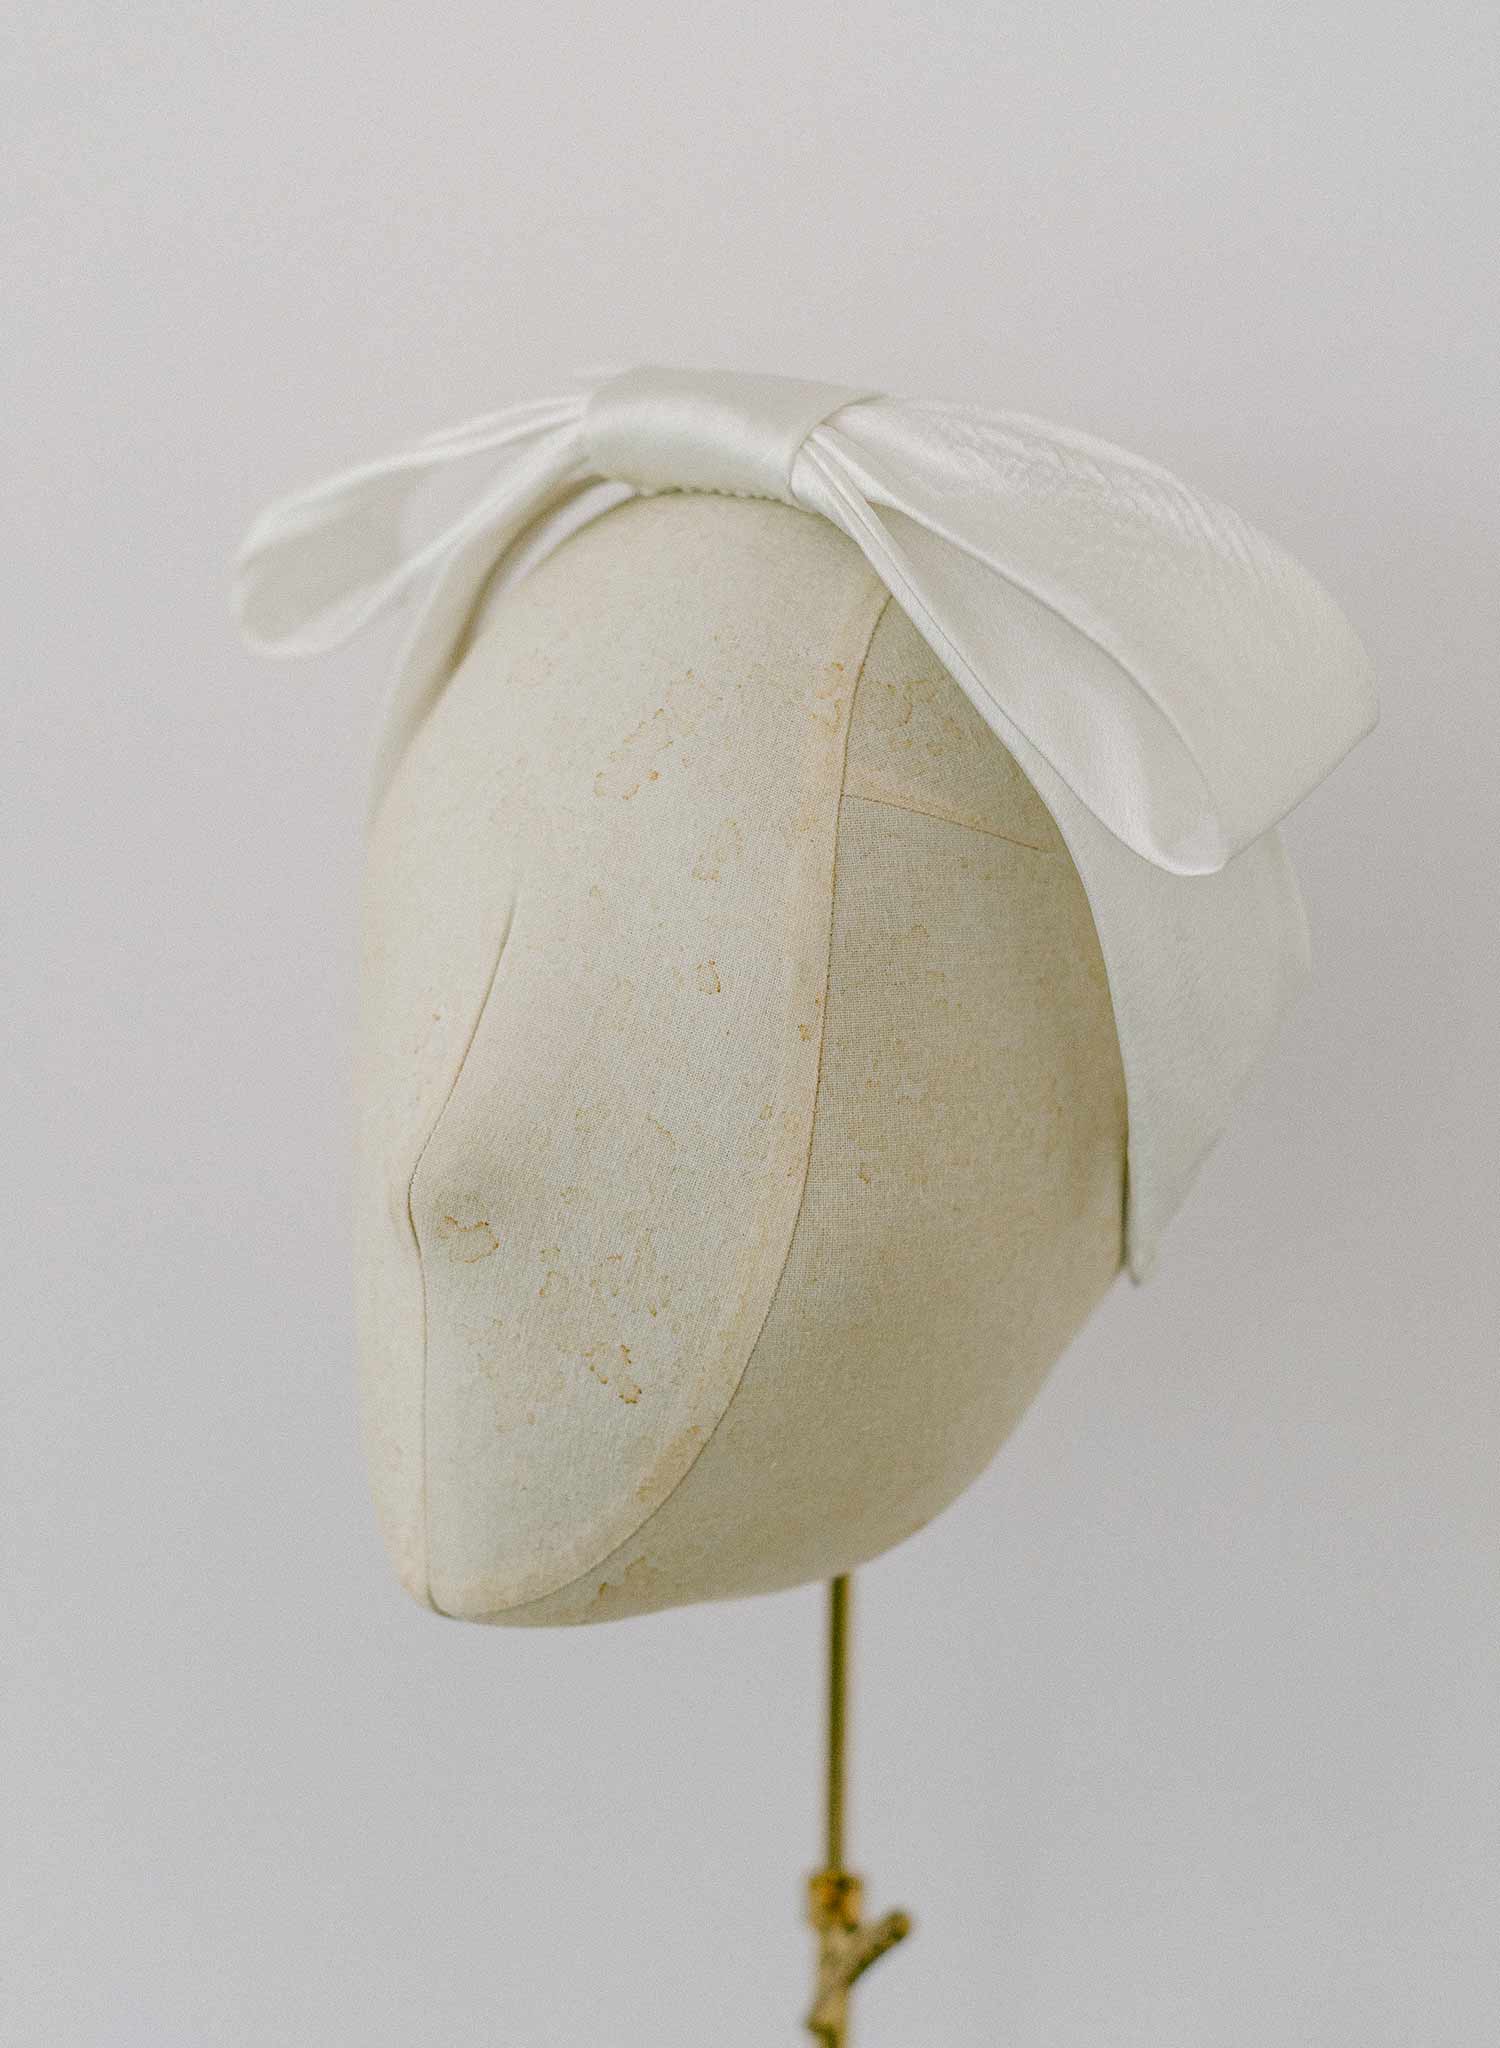 Silk bridal headband - Style #2354